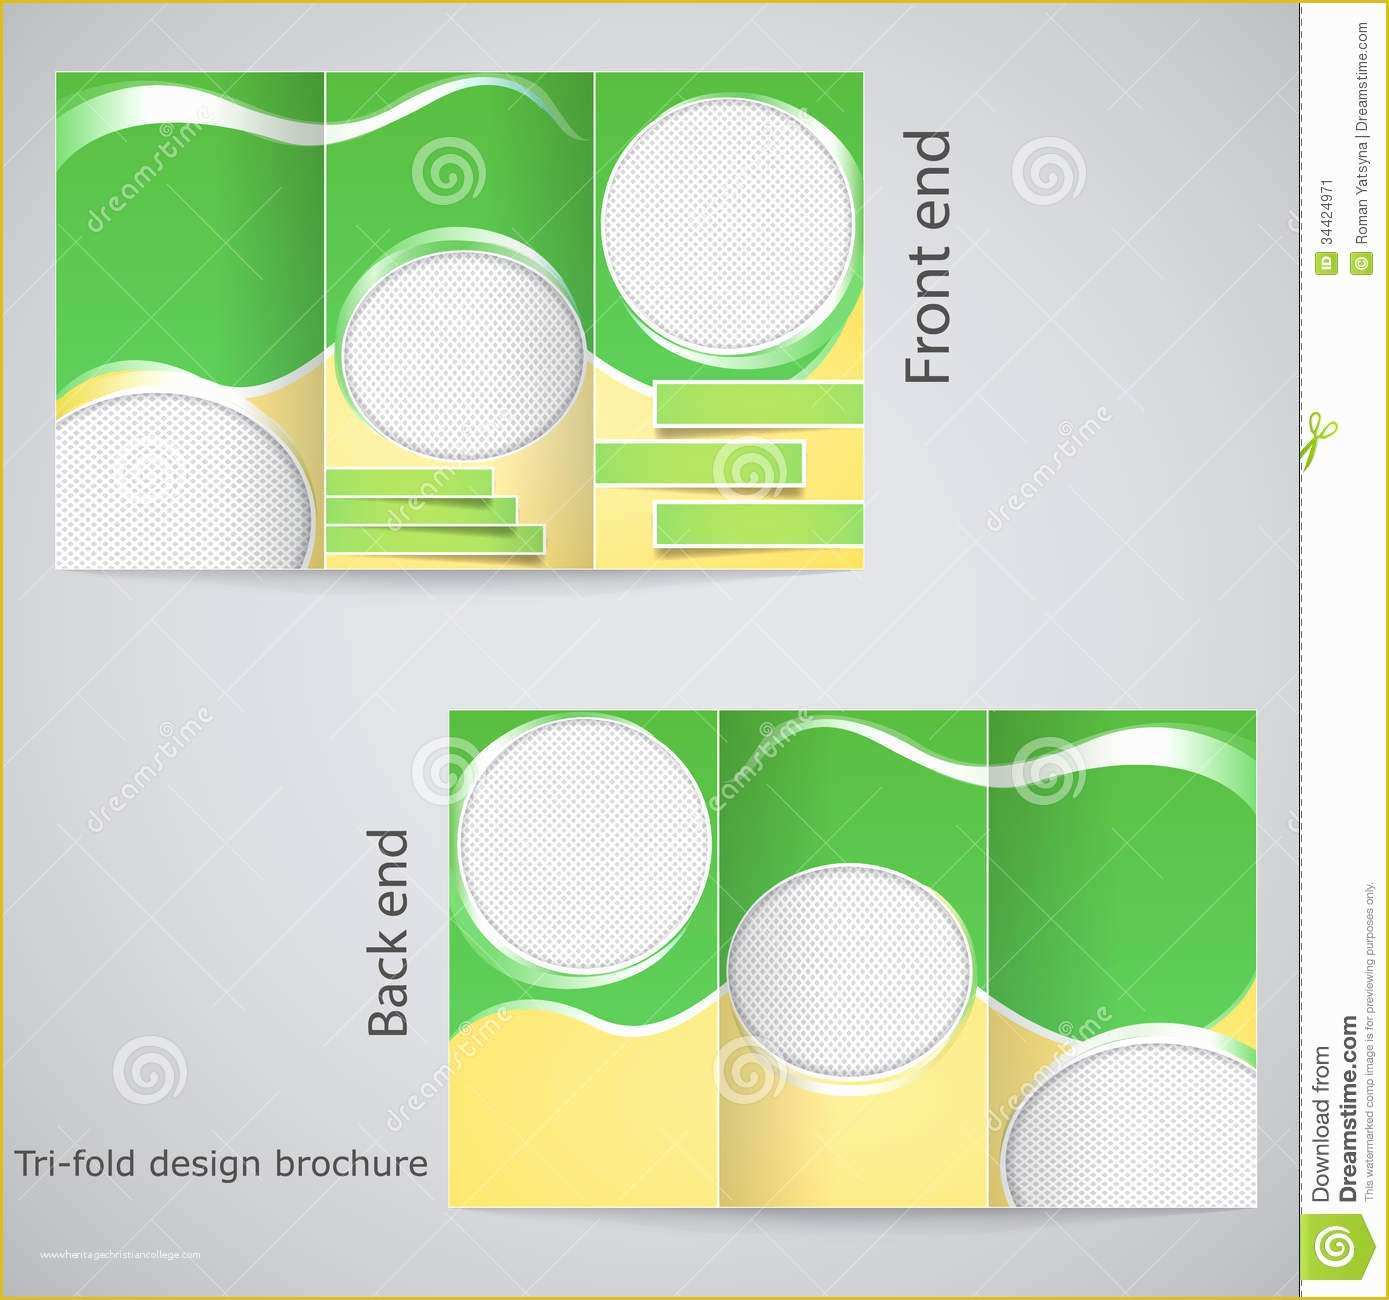 Free Online Mailer Design Templates Of Tri Fold Brochure Design Stock Vector Illustration Of